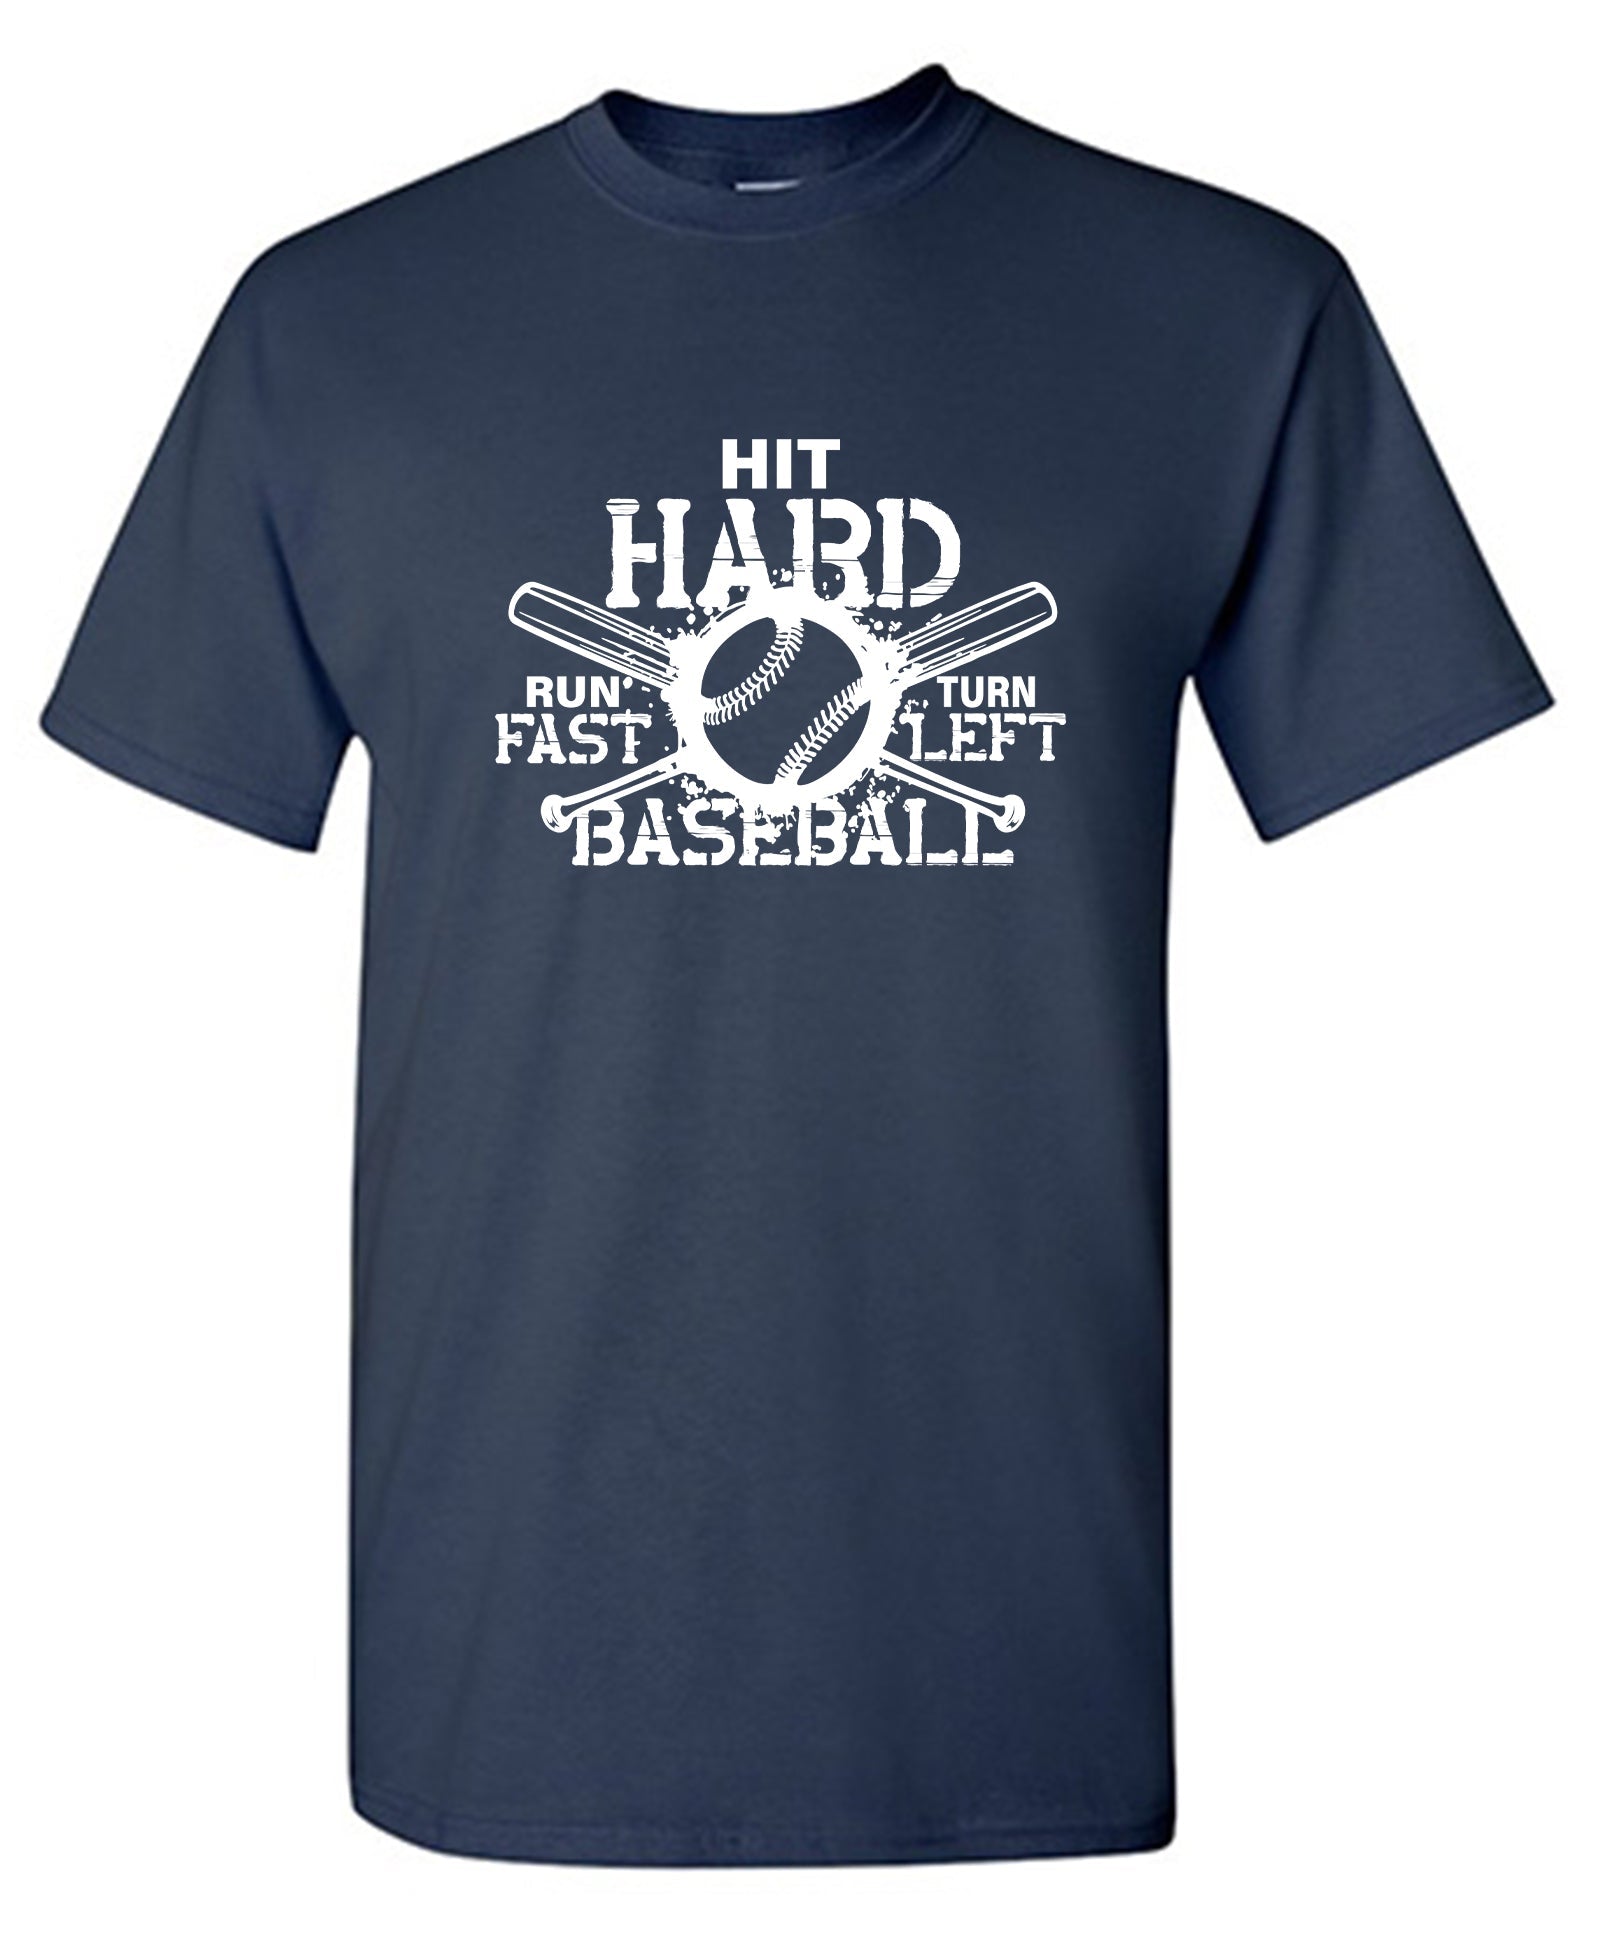 Hit Hard, Run Fast, Turn Left Baseball Shirt - Funny T Shirts & Graphic Tees